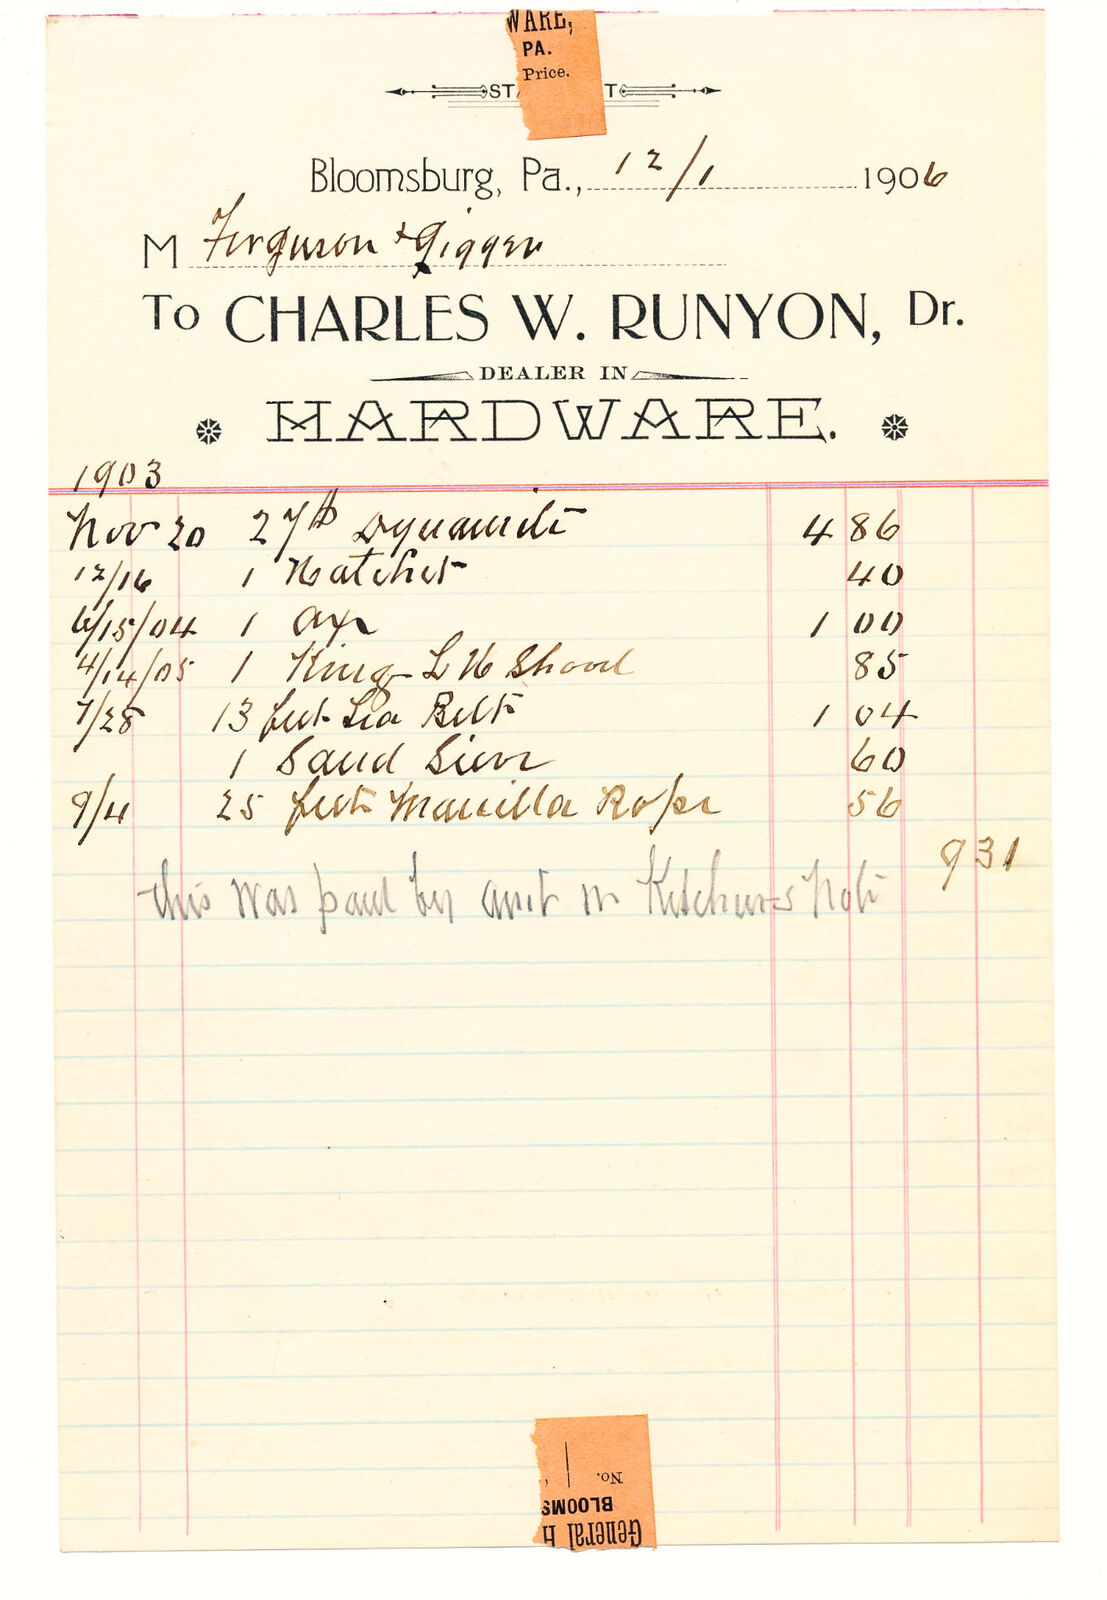 1906 BILL HEAD RECEIPT - CHARLES W RUNYON HARDWARE - BLOOMSBURG PA  HATCHET & AX